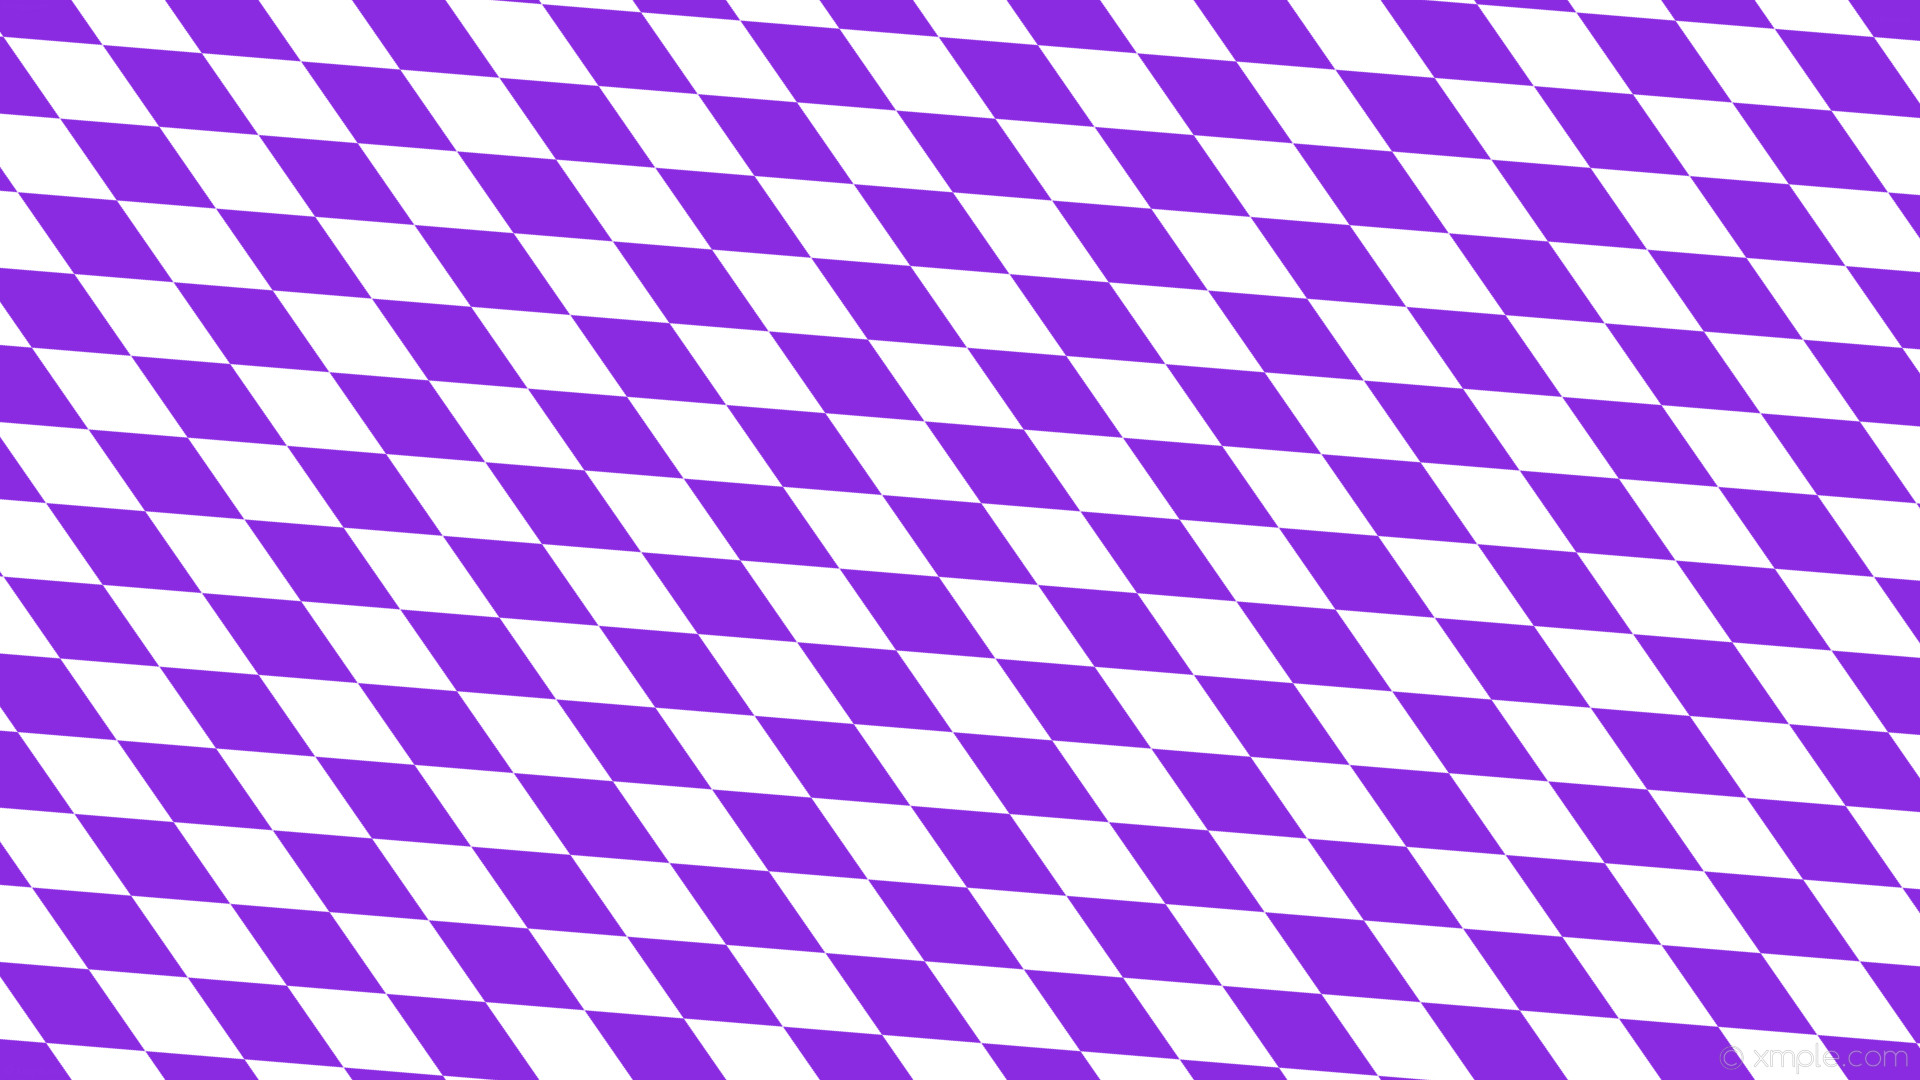 1920x1080 wallpaper rhombus lozenge white purple diamond blue violet #8a2be2 #ffffff  150Â° 180px 85px